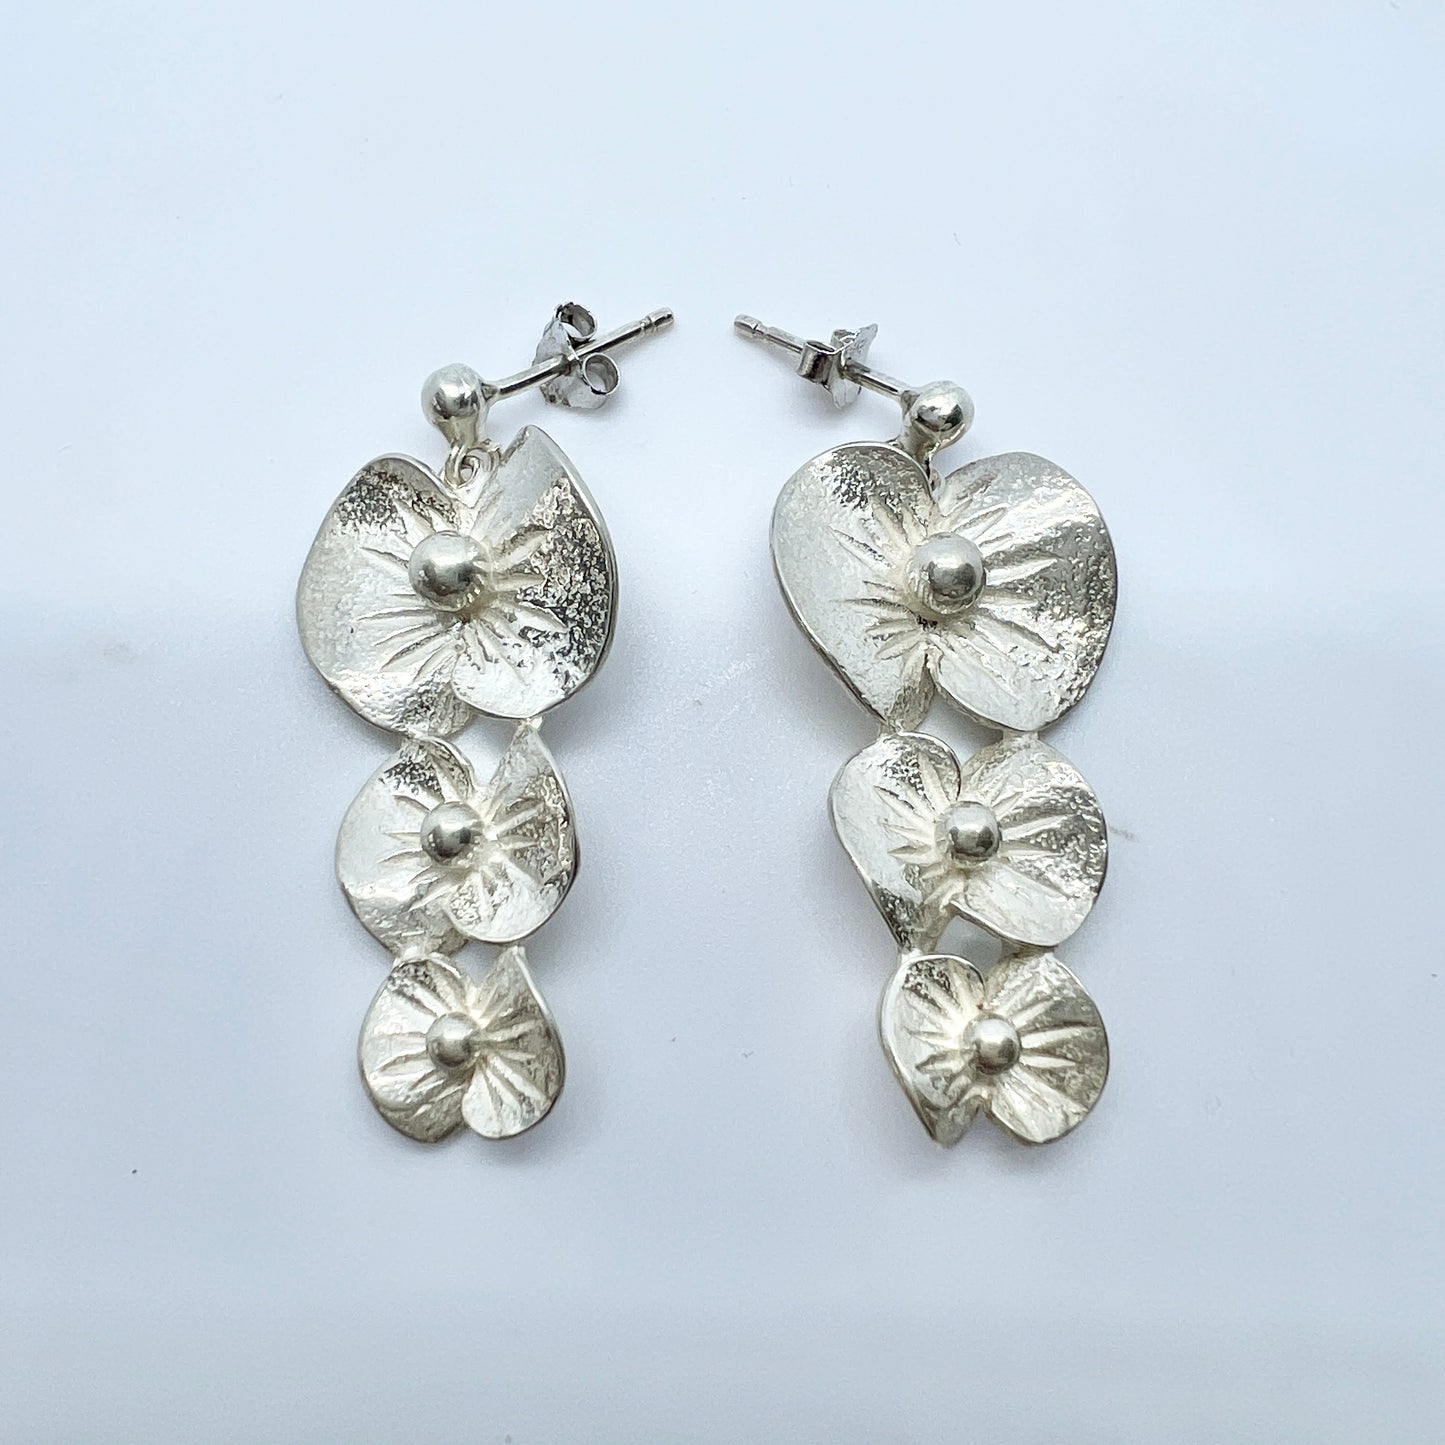 Theresia Hvorslev for MEMA, Sweden 1976. Vintage Sterling Silver Earrings. Design: Apple Blossom. Signed